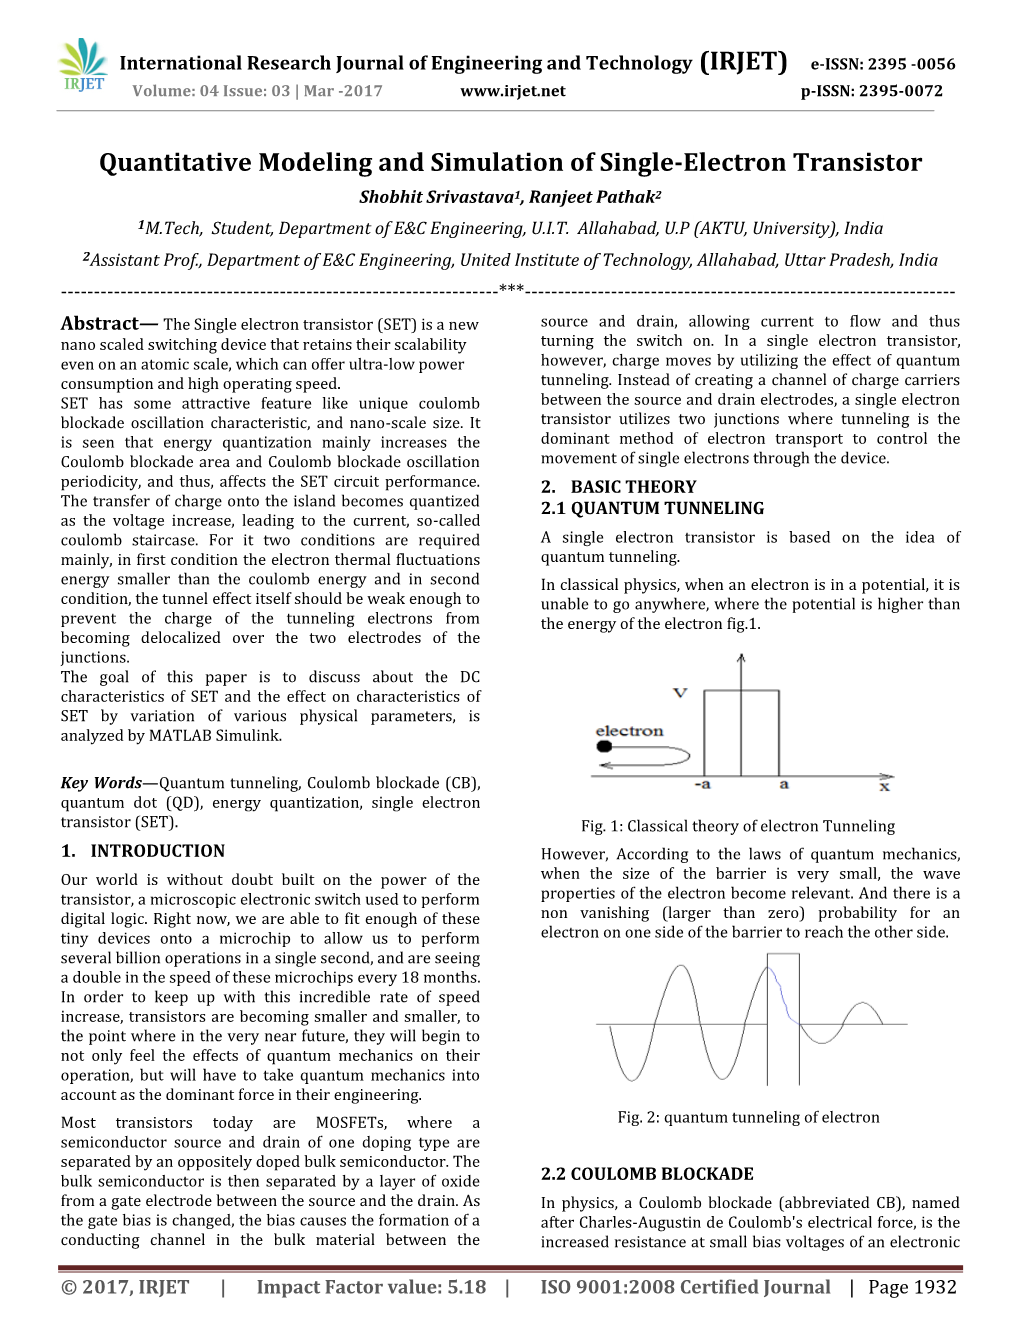 Quantitative Modeling and Simulation of Single-Electron Transistor Shobhit Srivastava1, Ranjeet Pathak2 1M.Tech, Student, Department of E&C Engineering, U.I.T